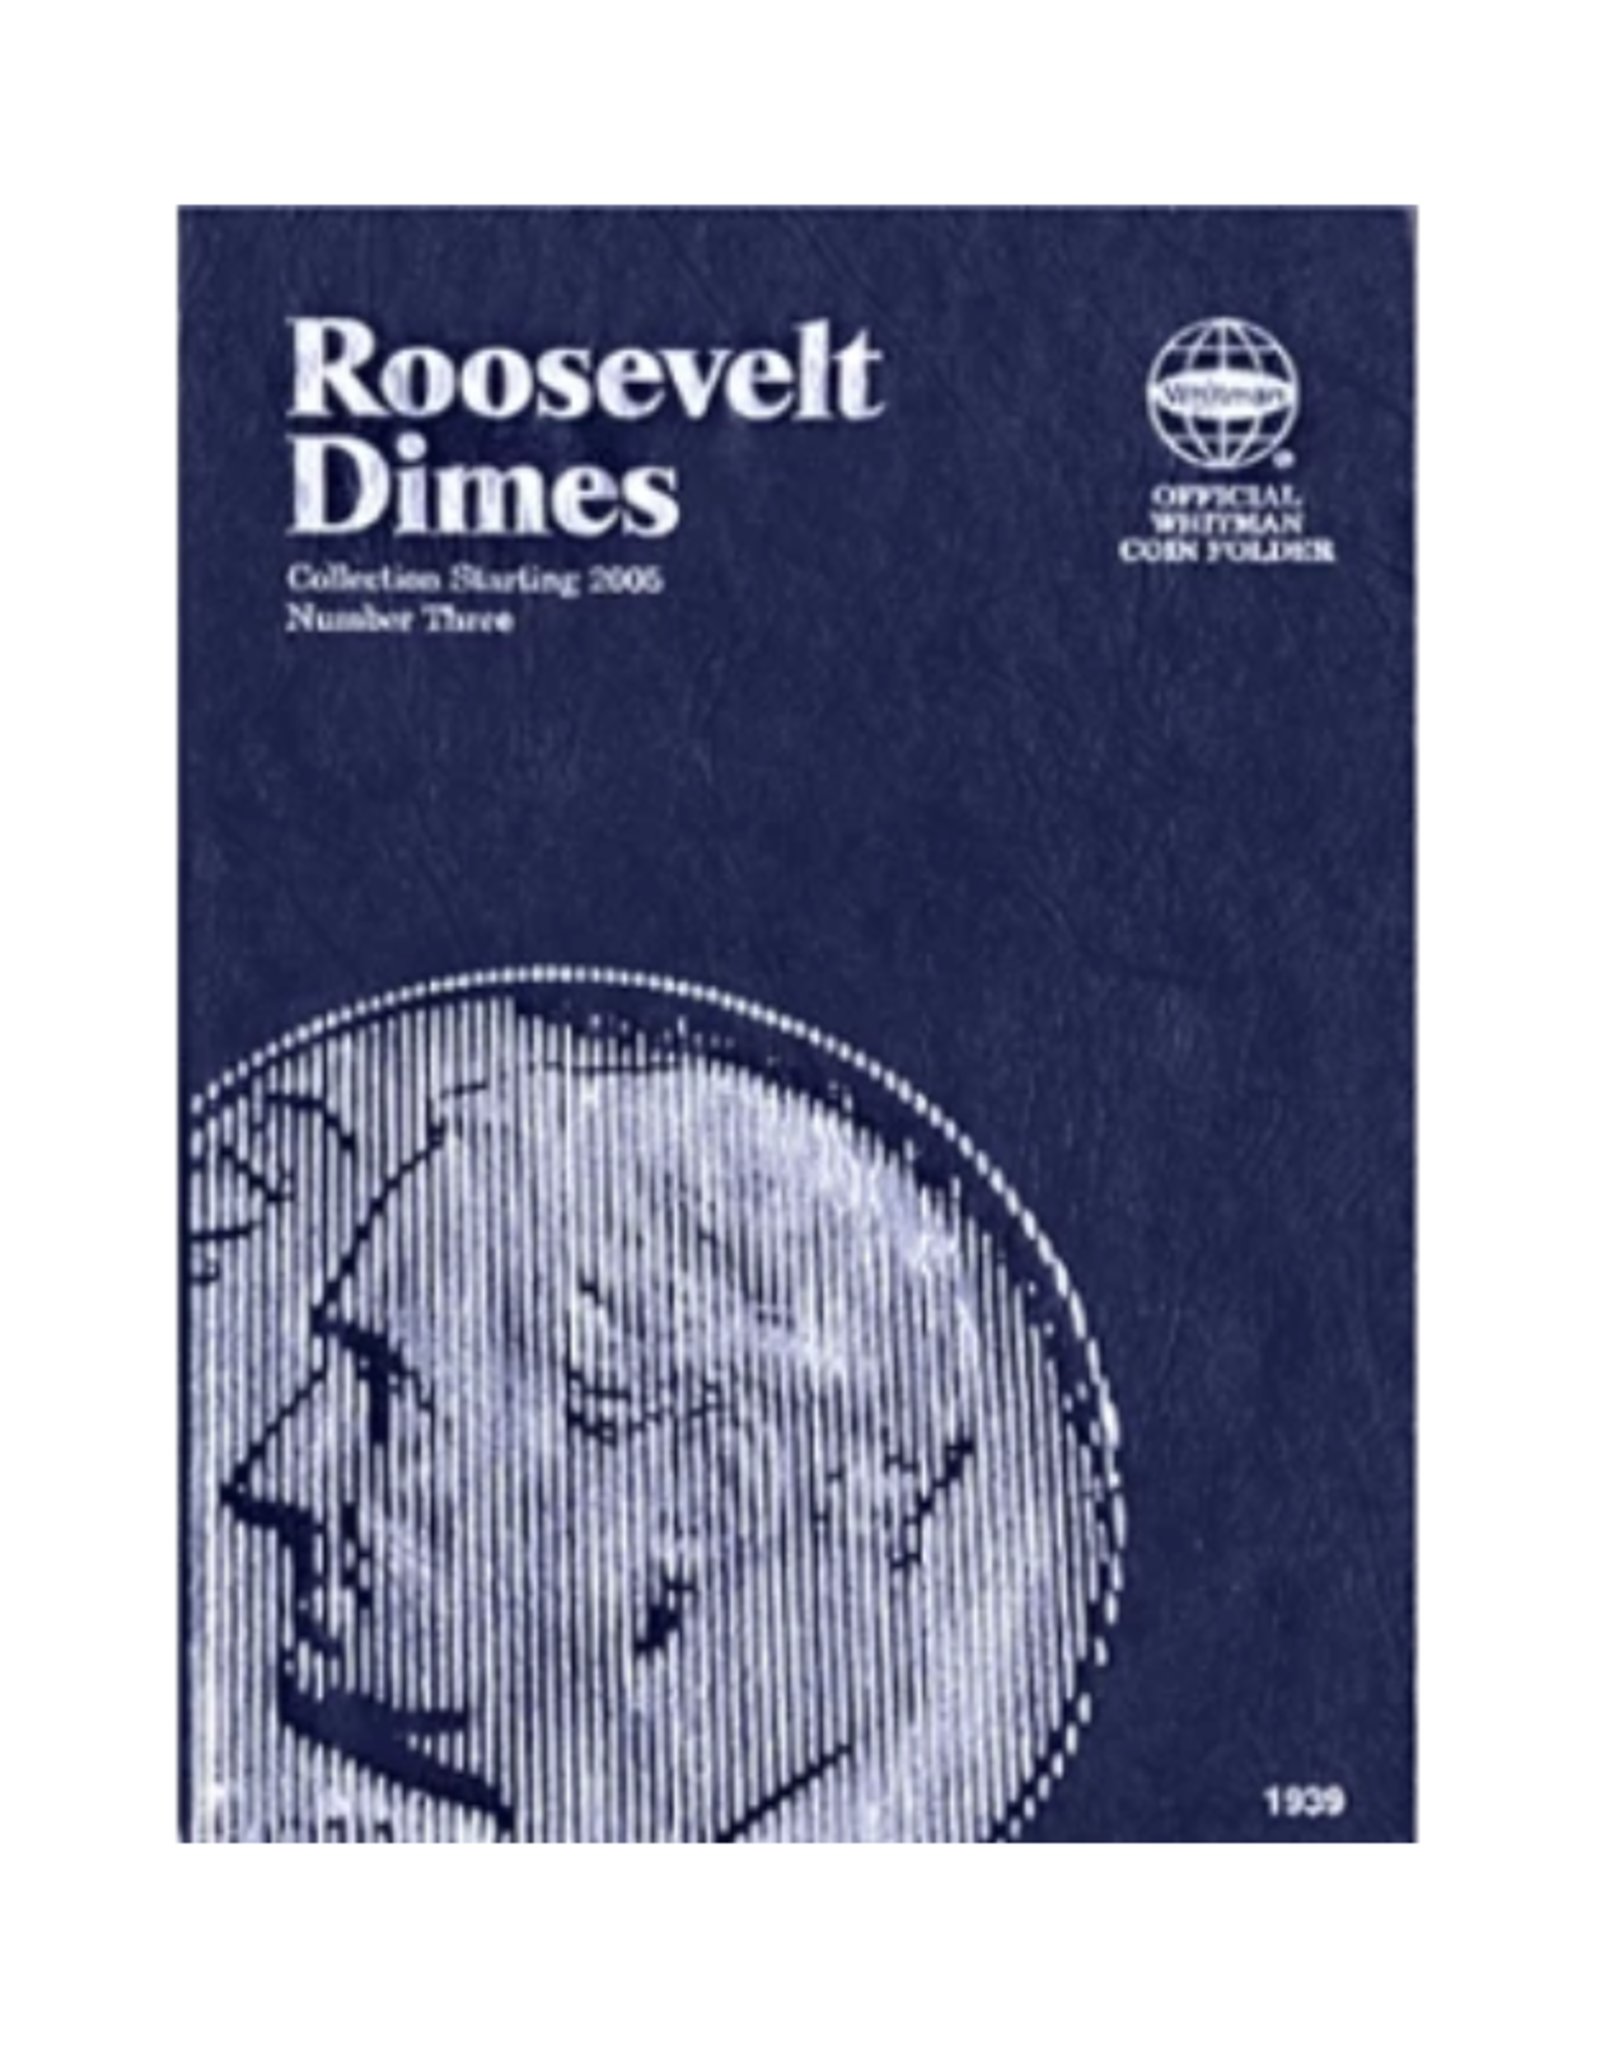 (S/O) Roosevelt Dimes No. 3 (2005-Onward)